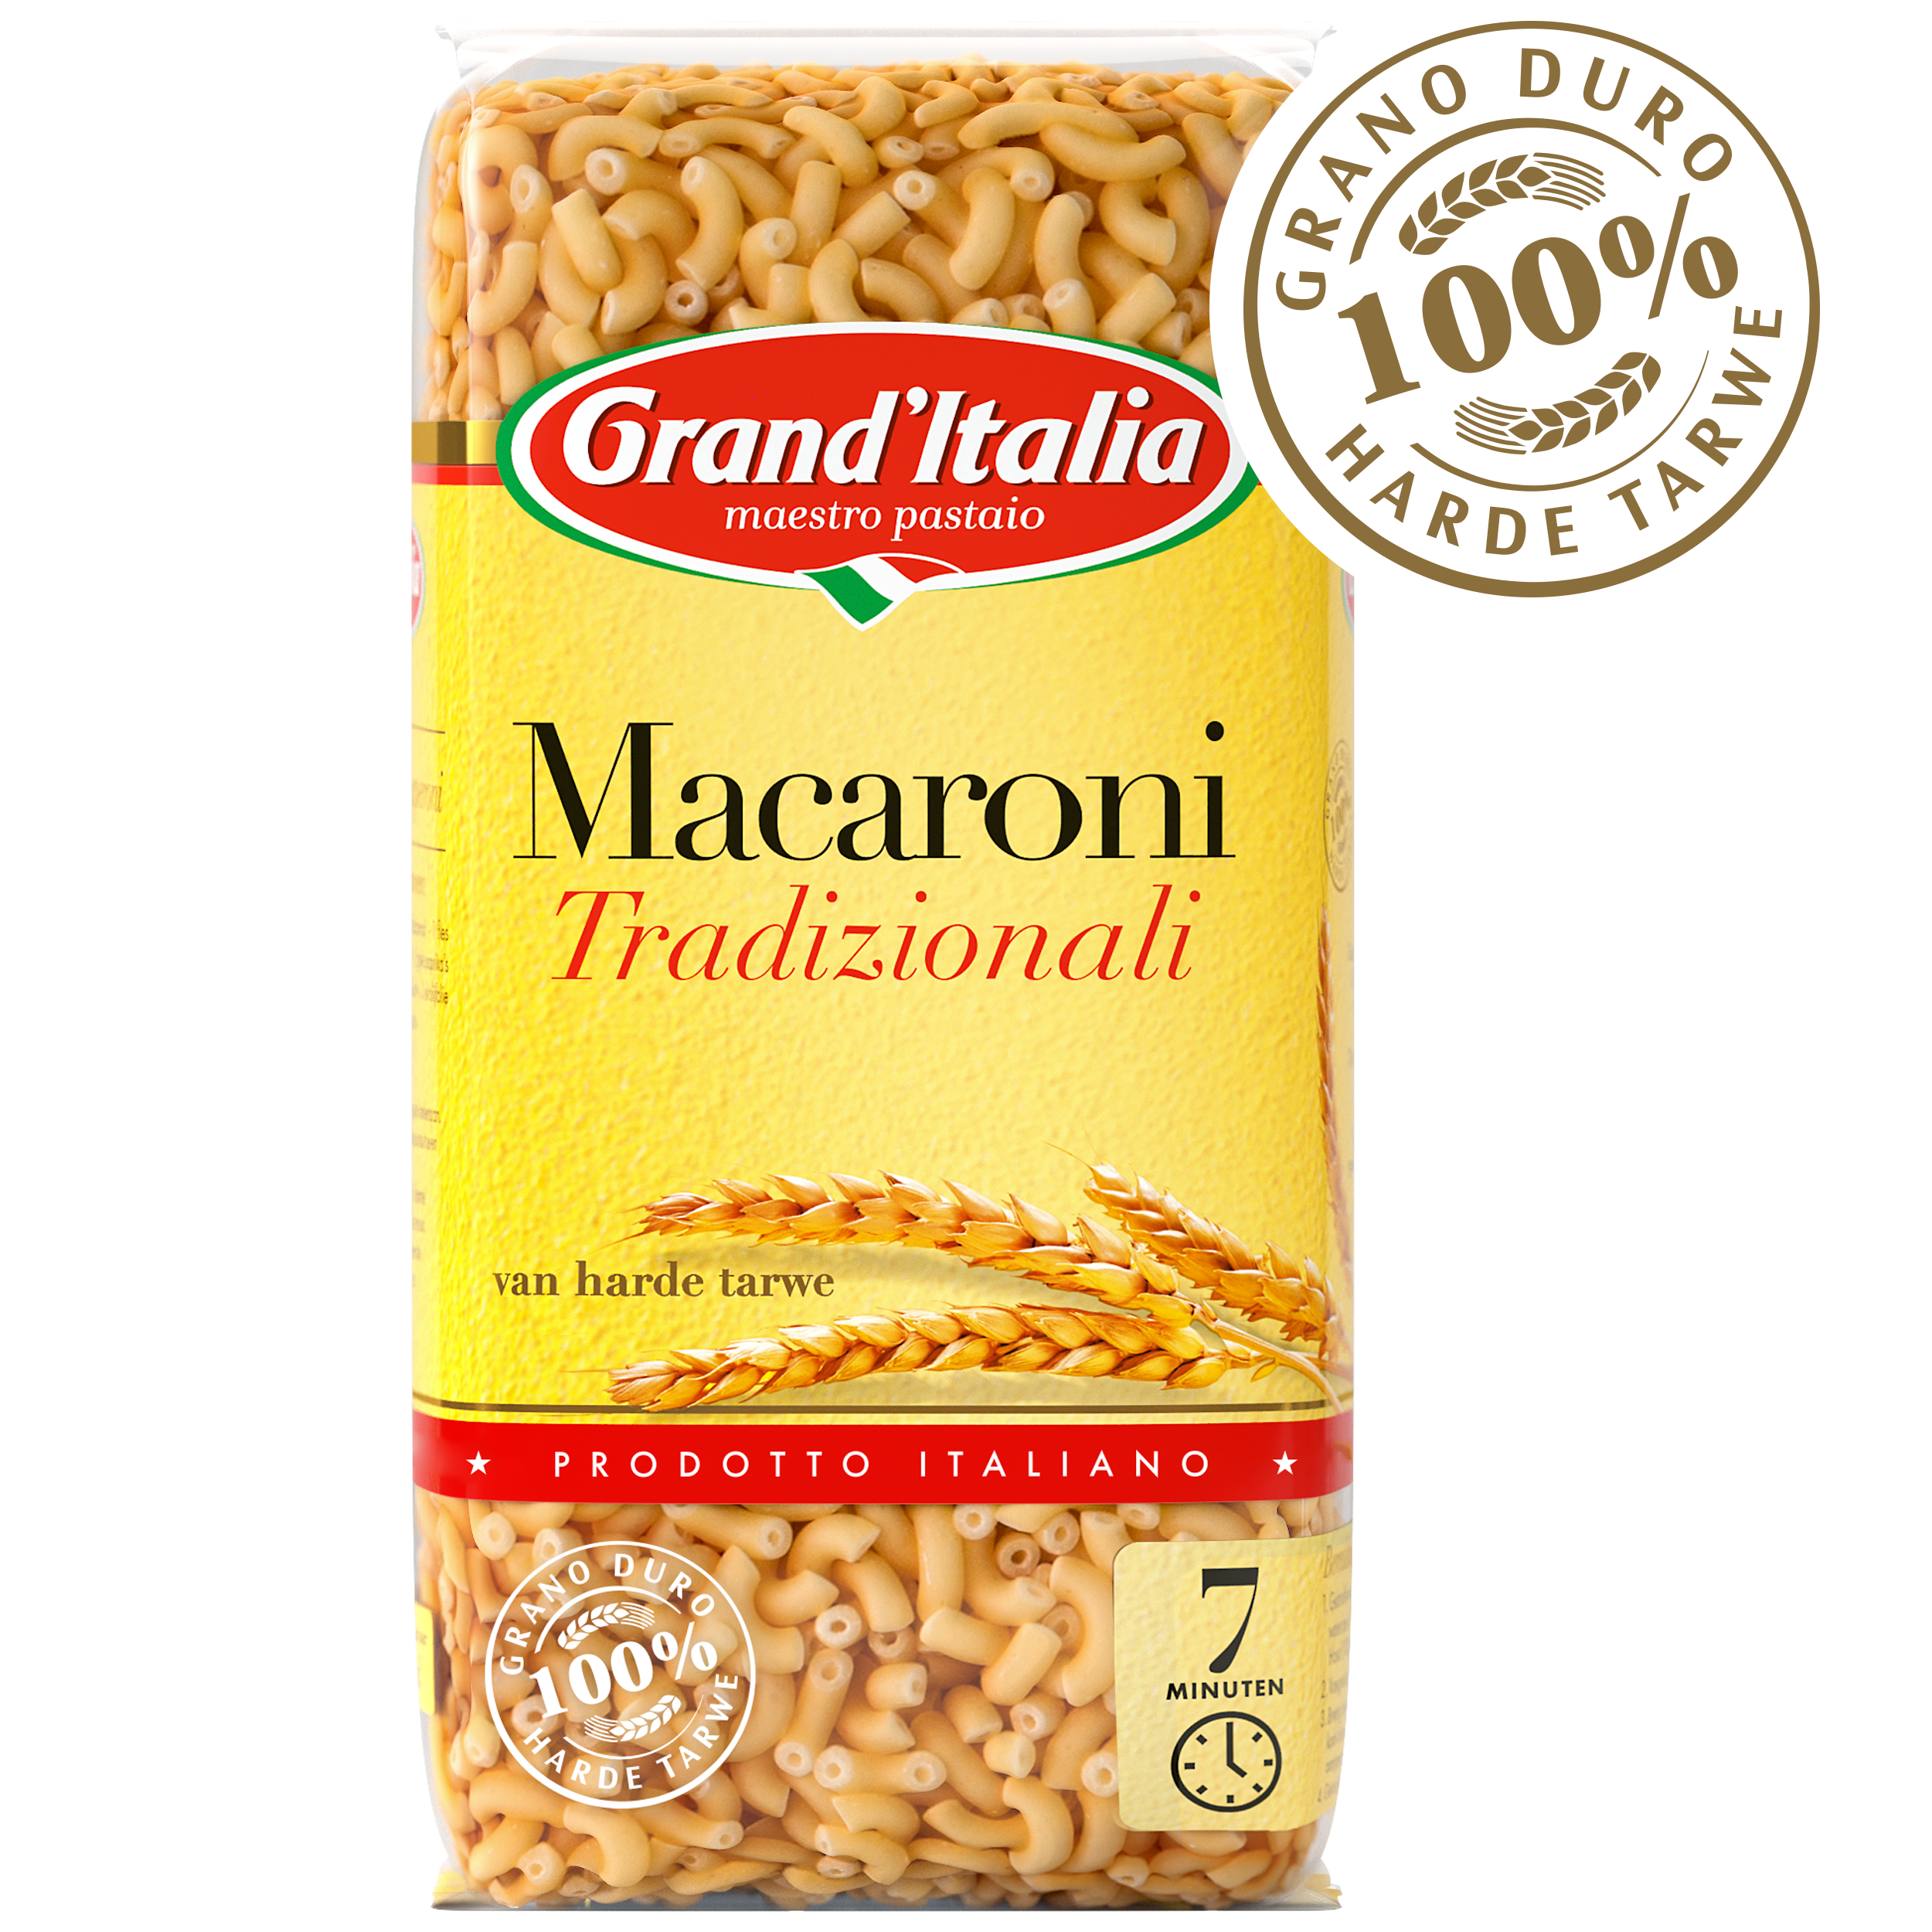 Pasta Macaroni Tradizionali 500g claim Grand'Italia